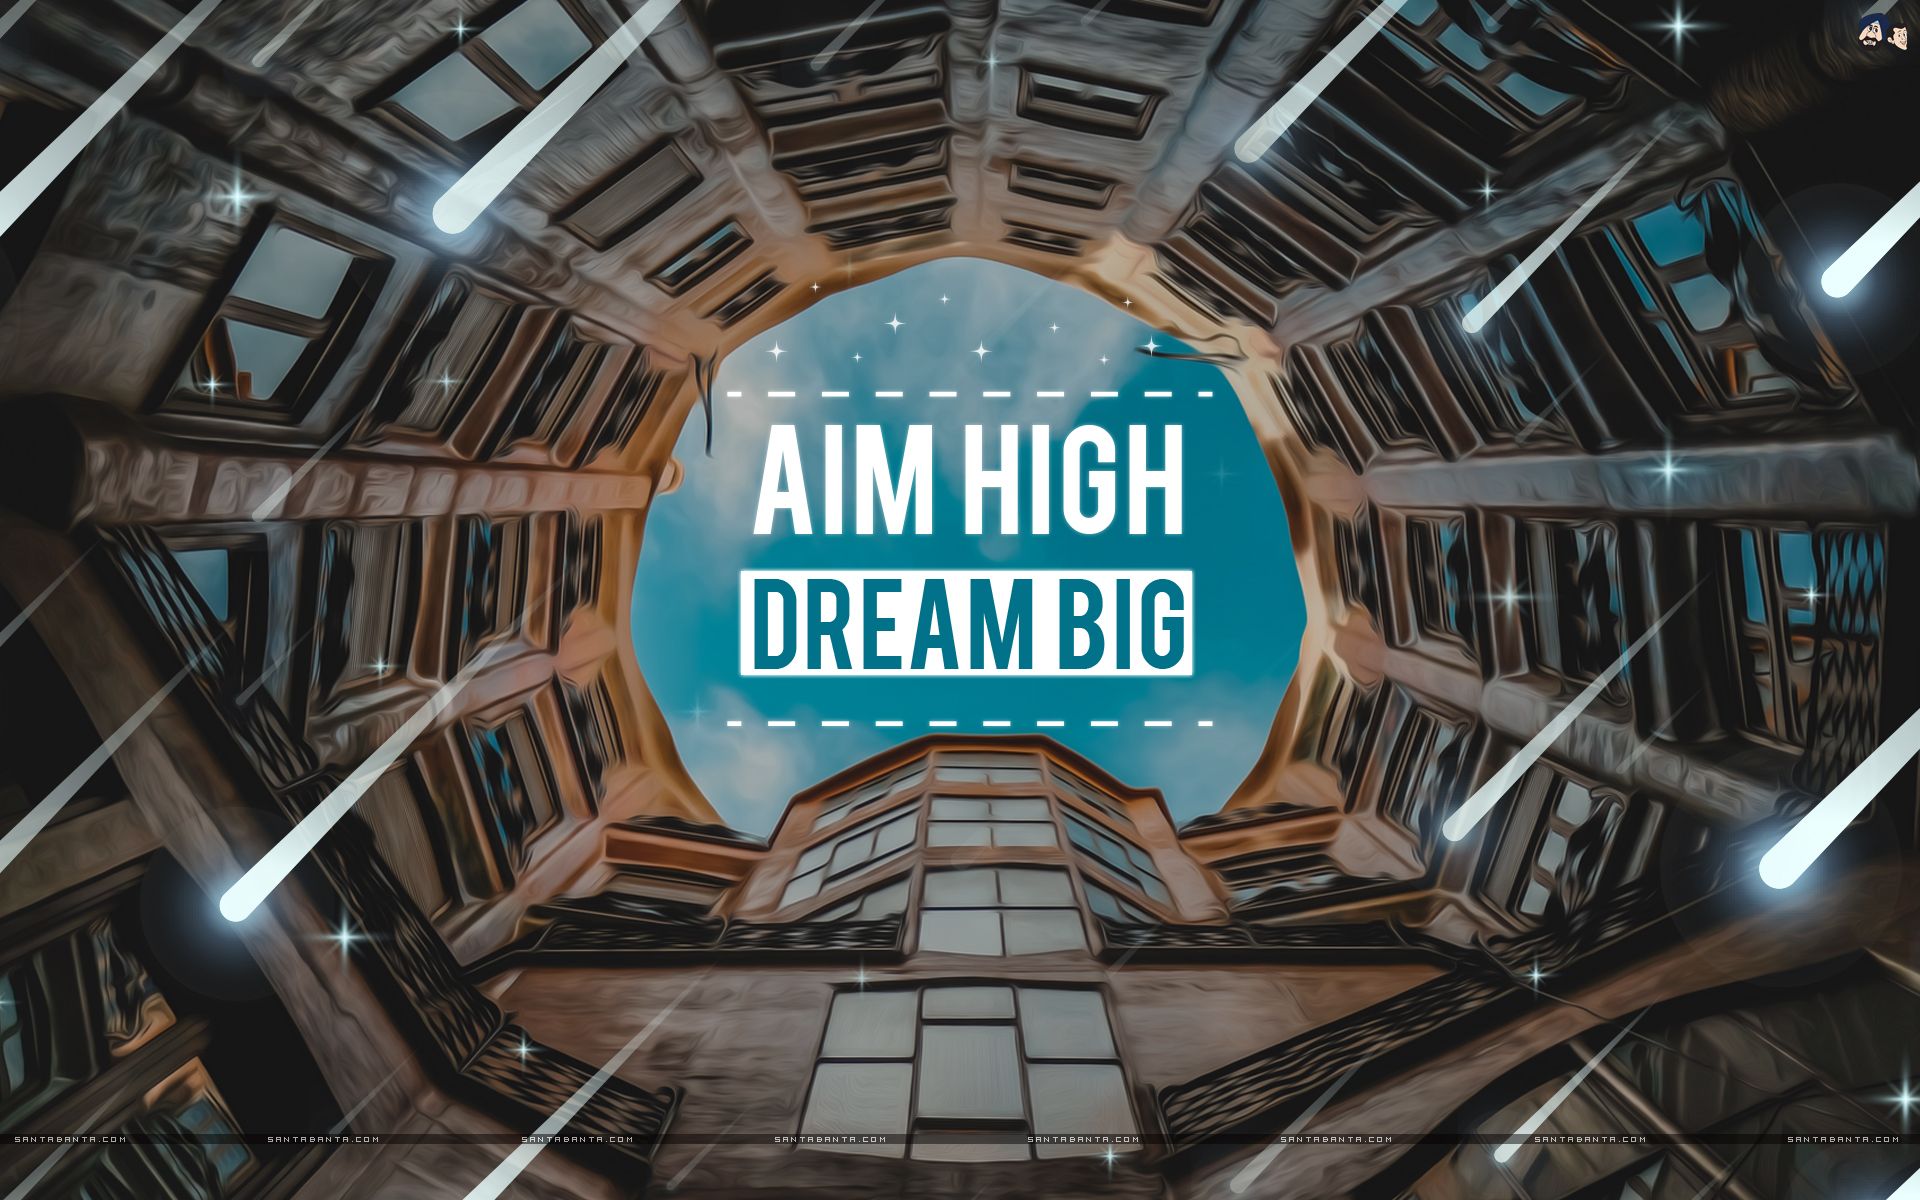 Aim High Dream Big.